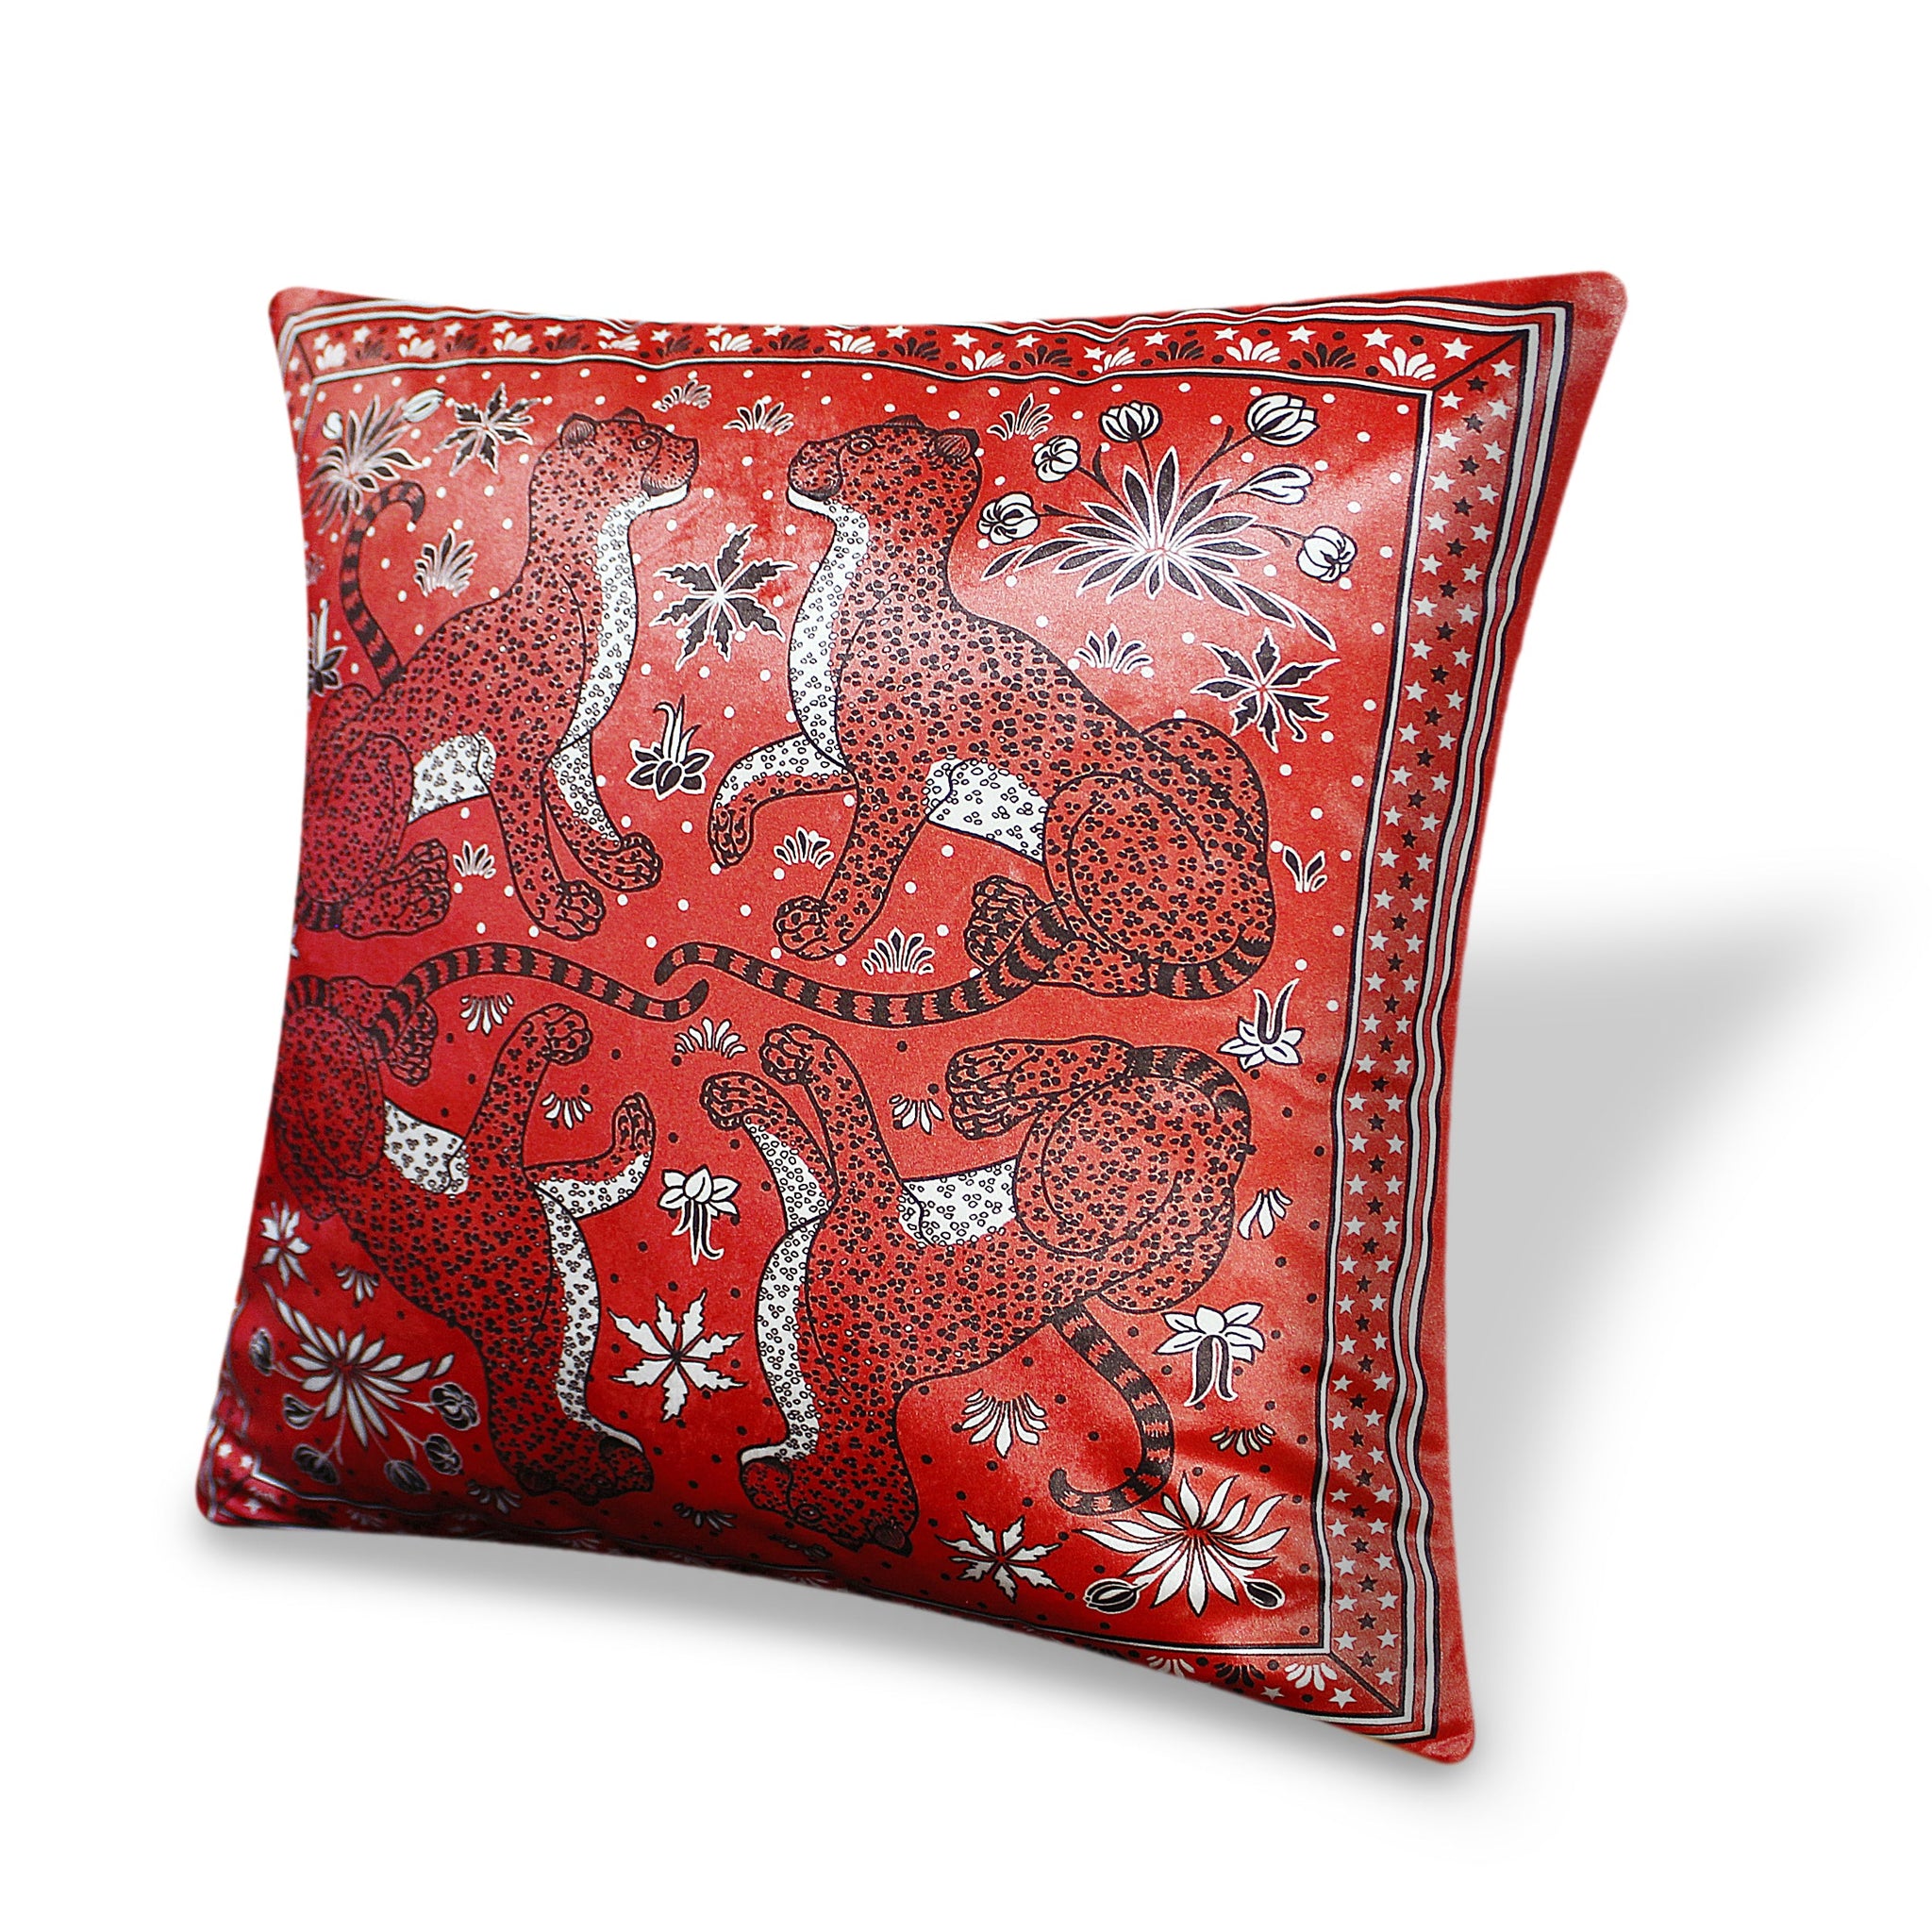 Red Velvet Pillow Cover Leopard Decorative Cushion Cover Pillowcase Modern Home Decor Throw Pillow for Sofa Chair 45x45cm 18x18 Inches